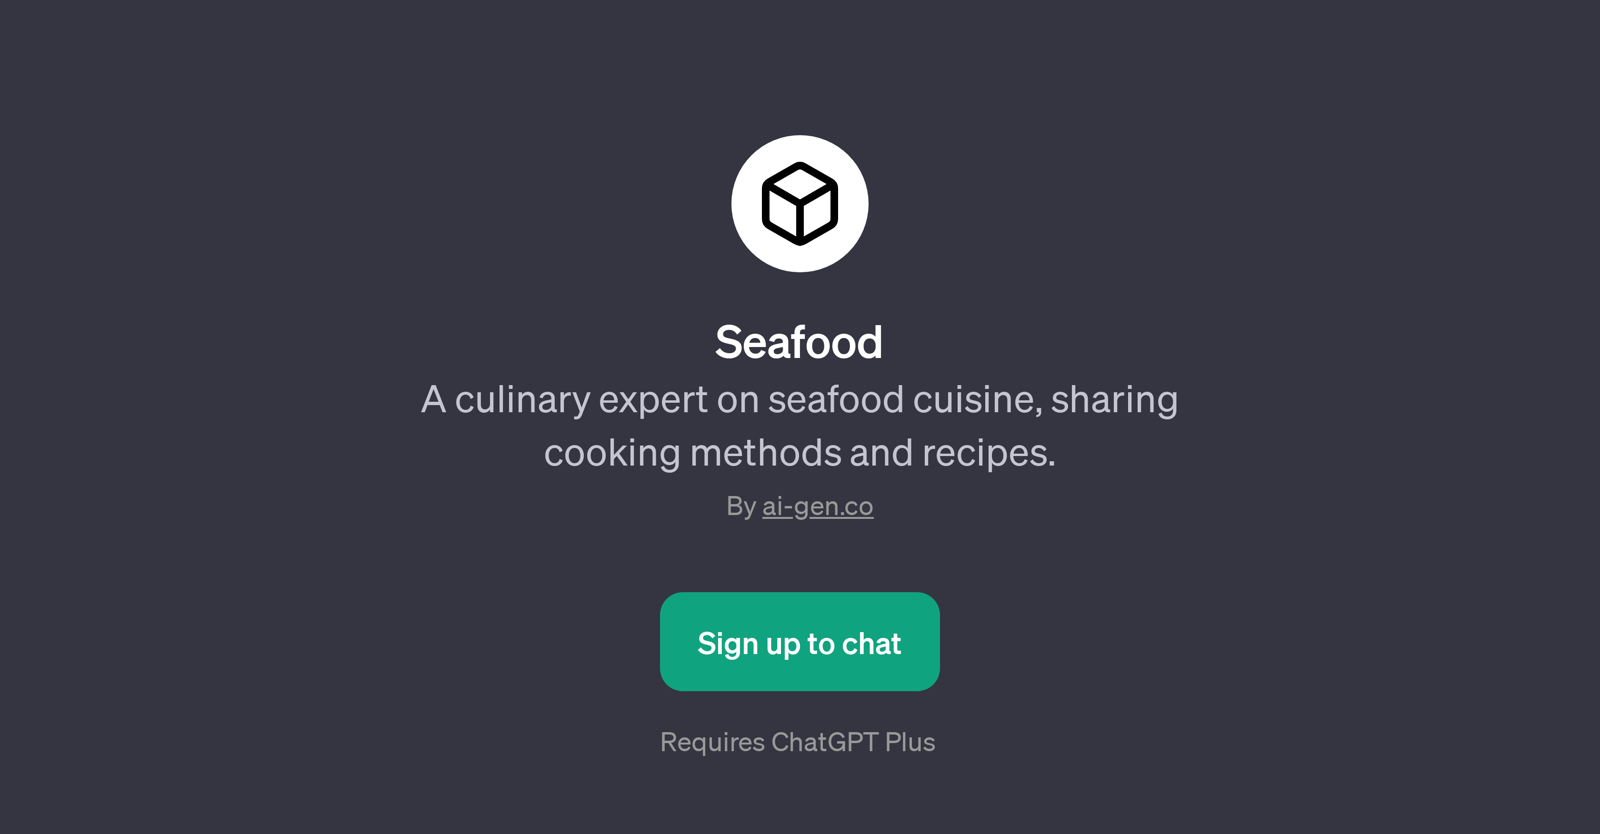 SeafoodPage website